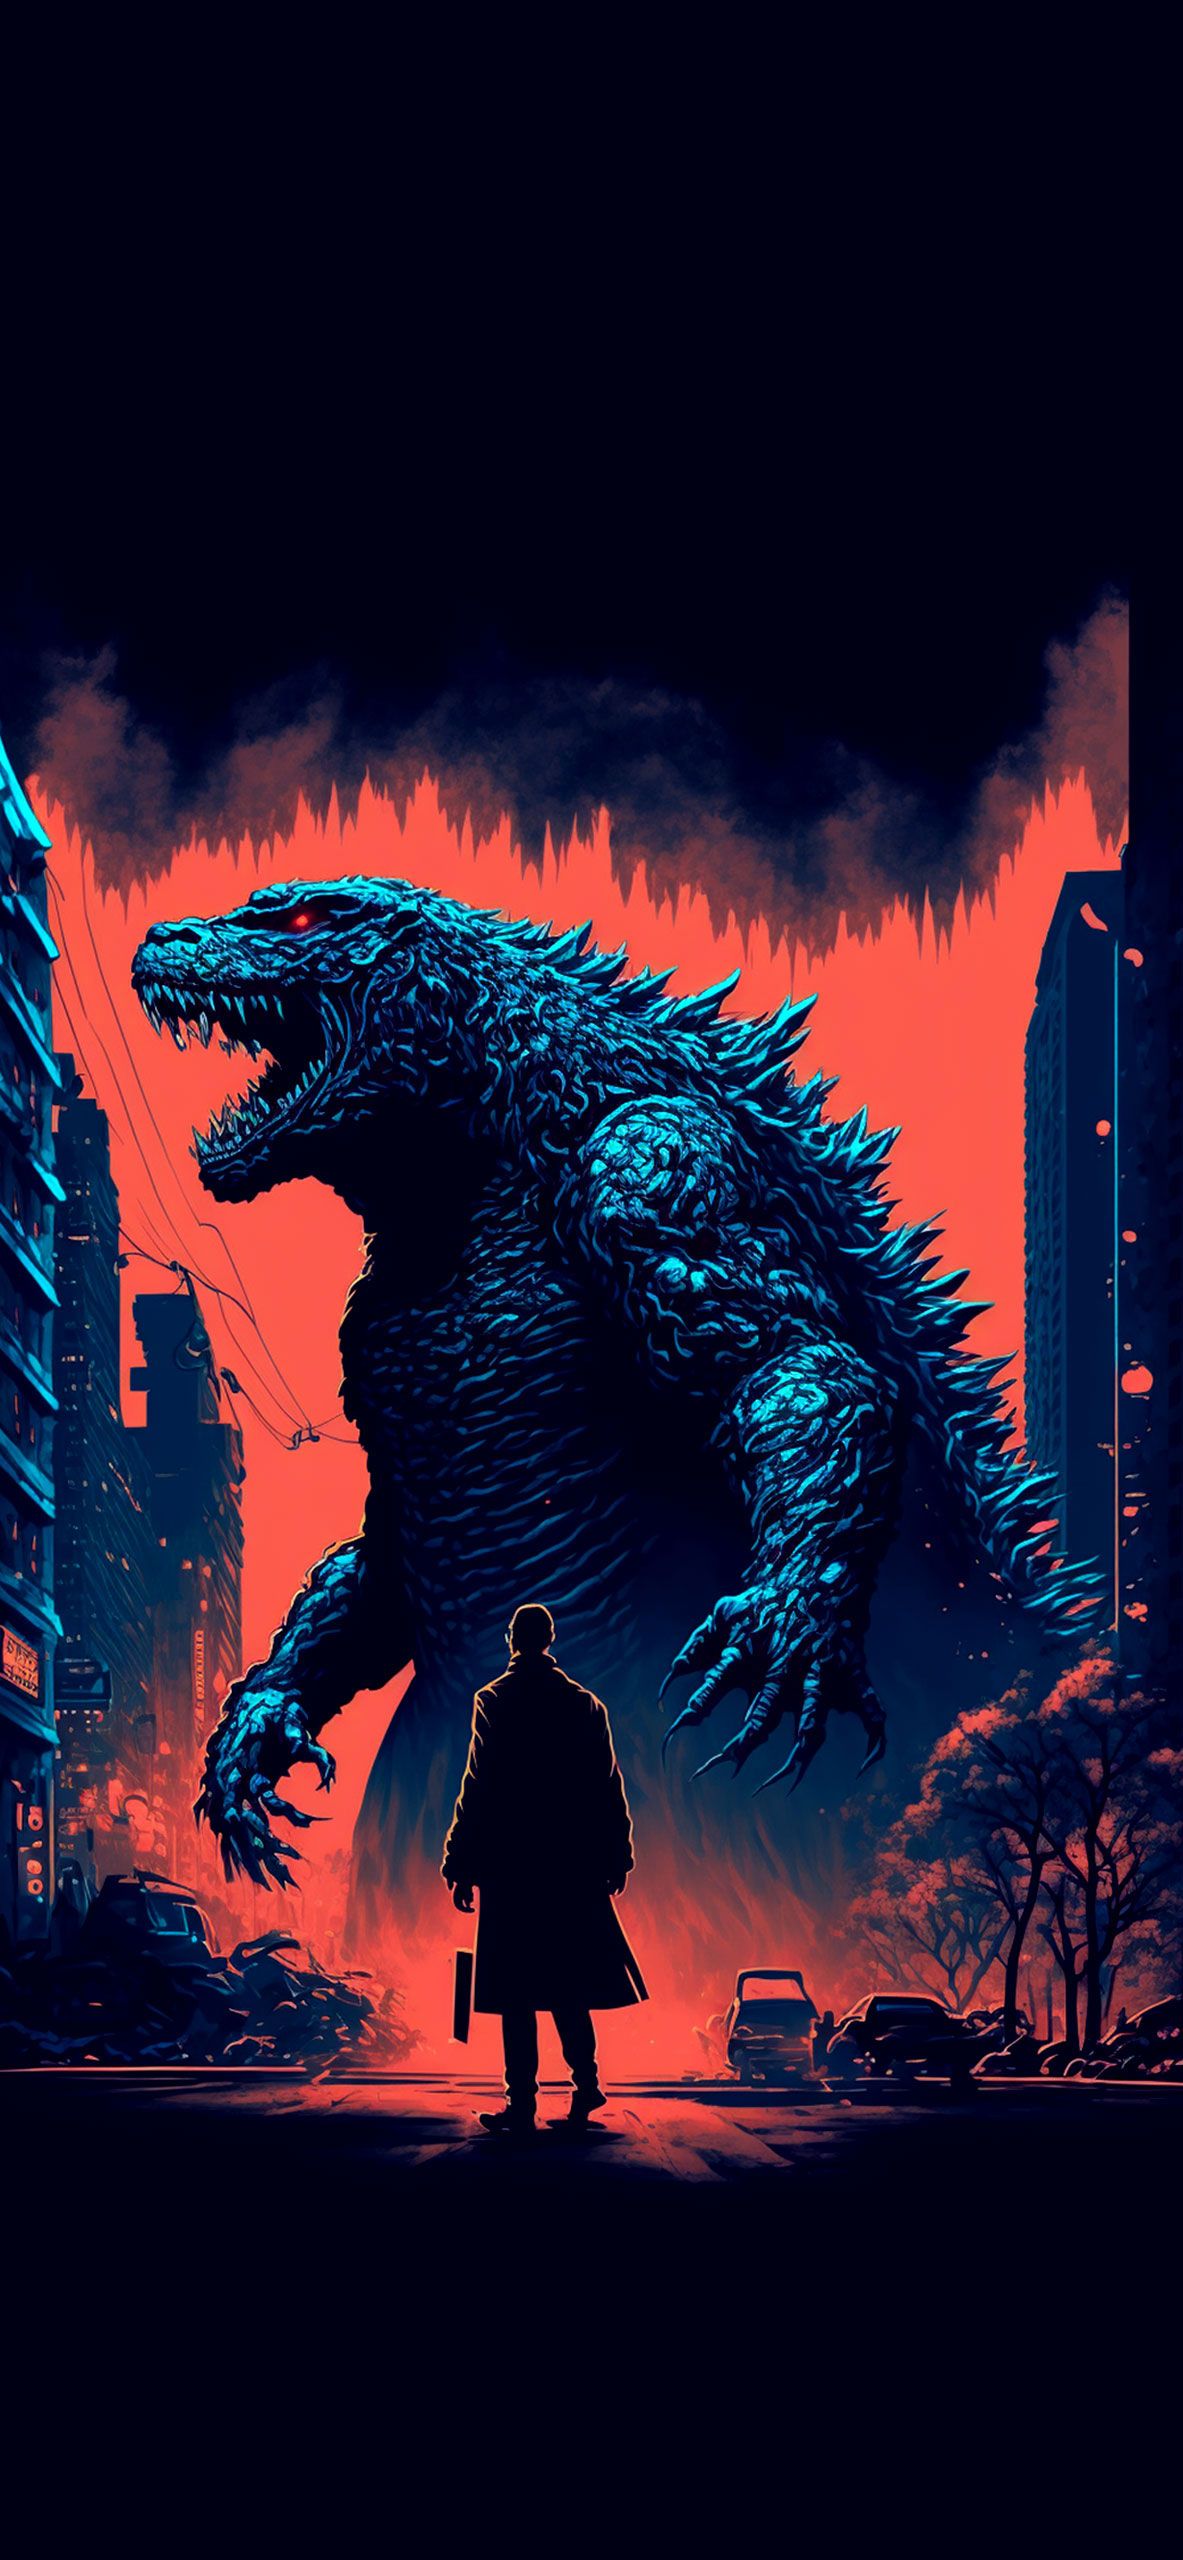 Godzilla in City Aesthetic Wallpaper Wallpaper iPhone